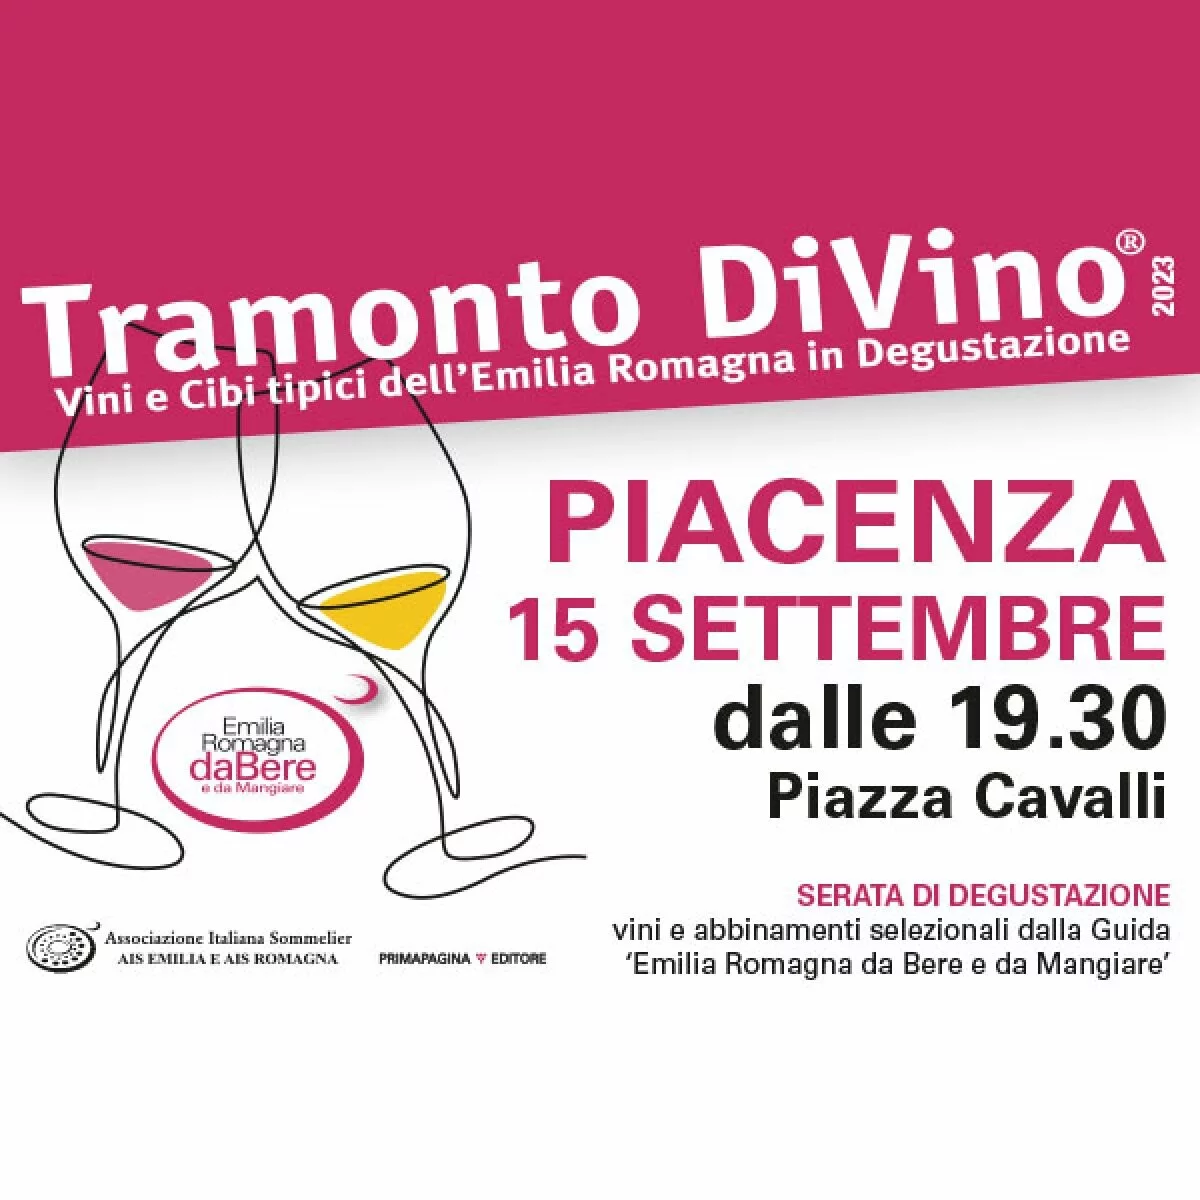 Tramonto DiVino - Piacenza